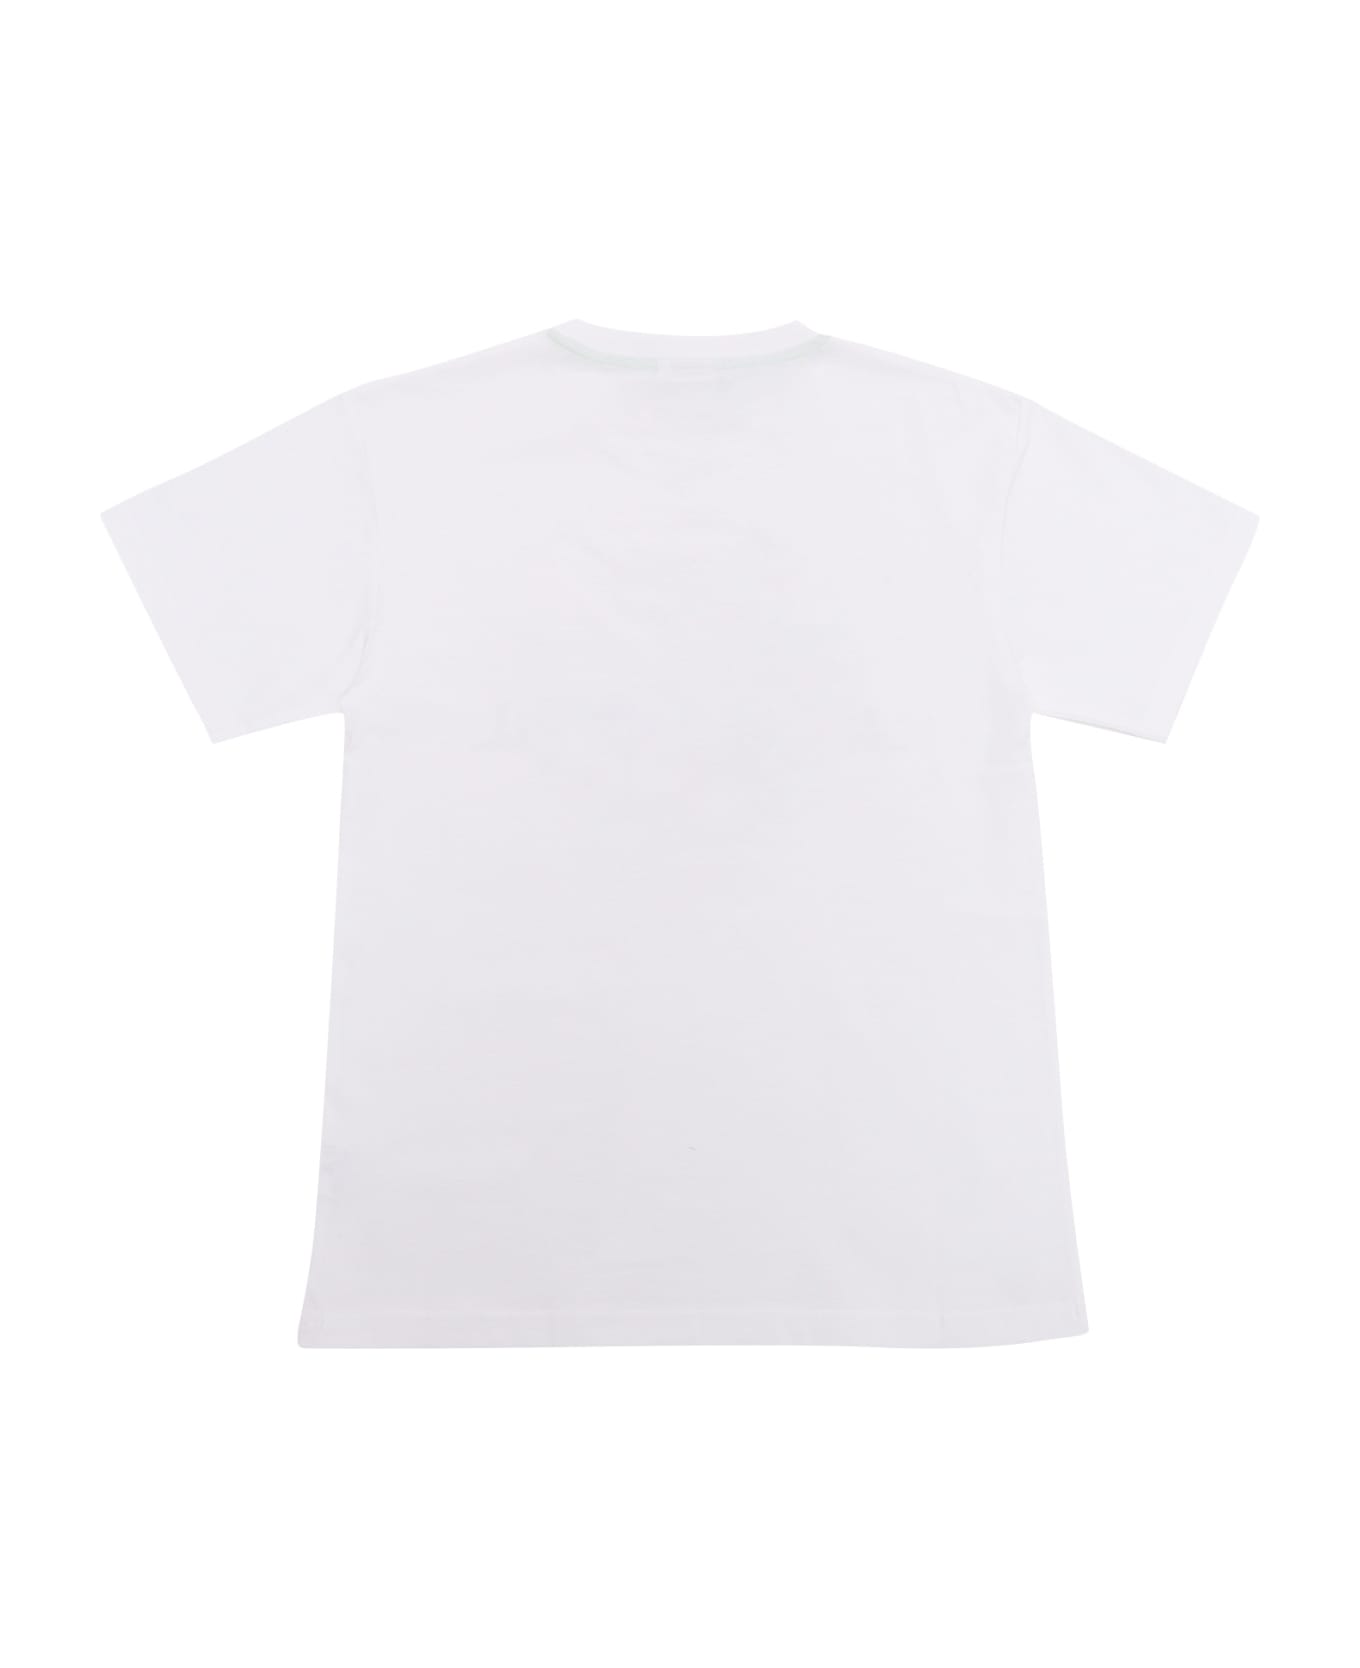 Hugo Boss White T-shirt With Print - WHITE